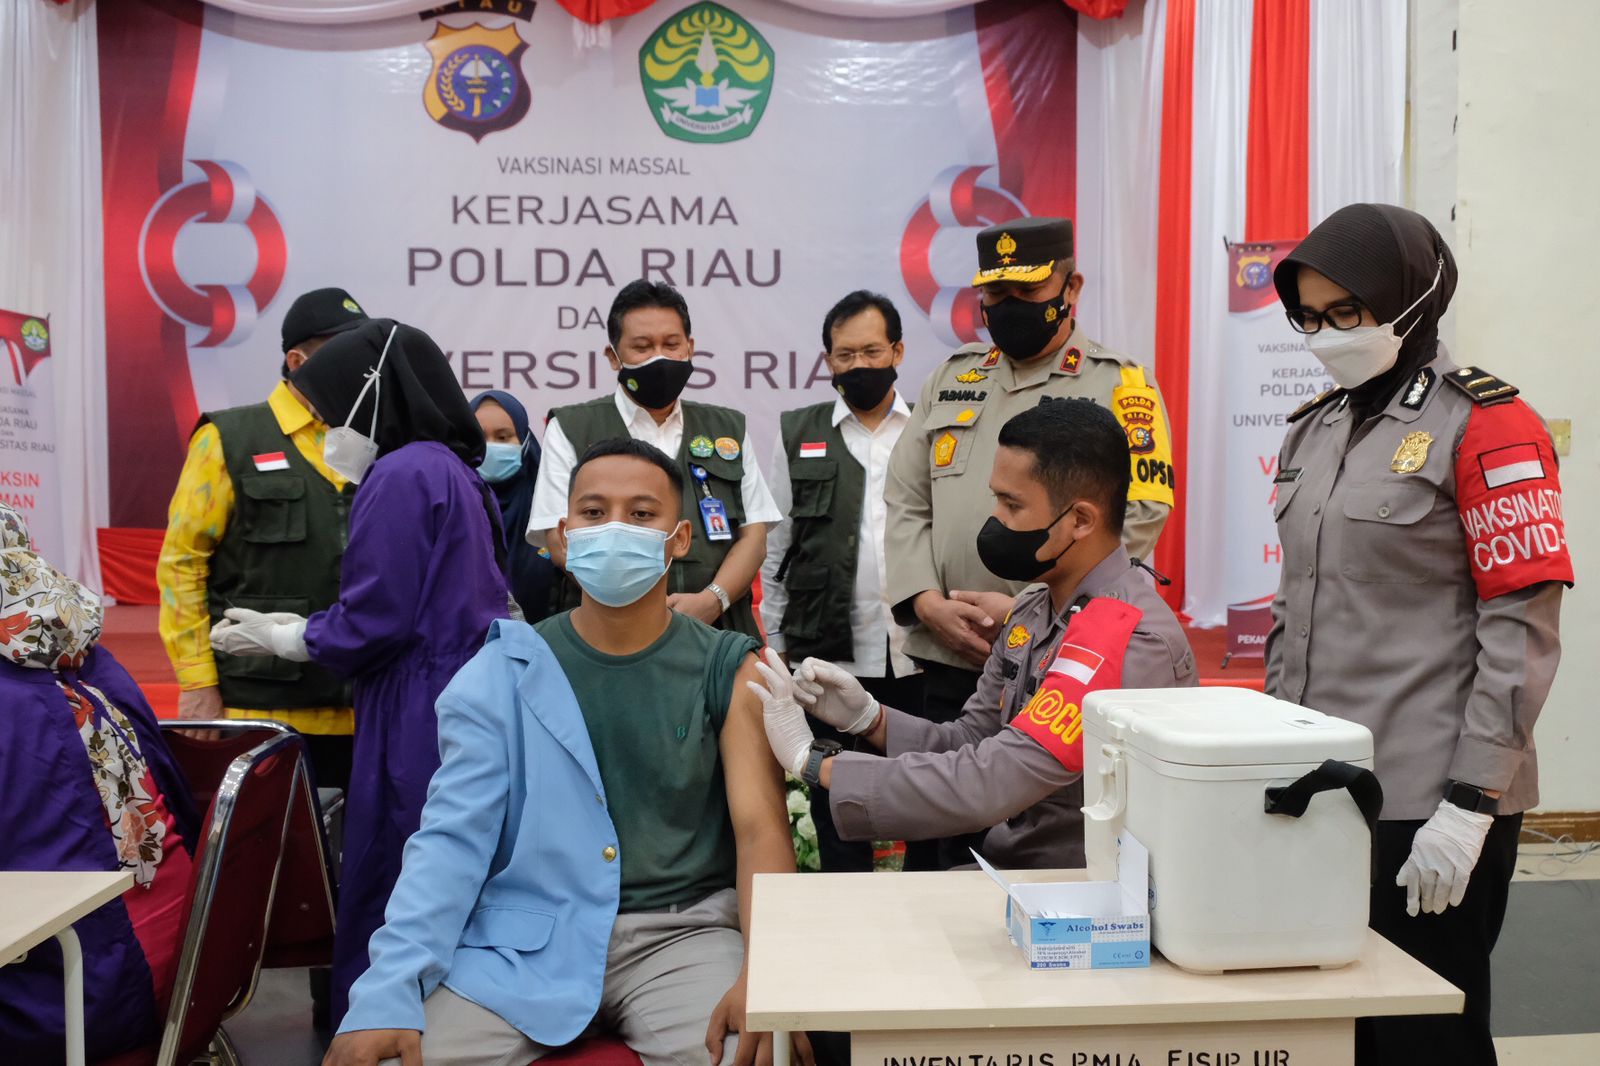 Dorong Percepatan Herd Immunity Kampus, Polda Riau Sediakan 2.400 Dosis Vaksin